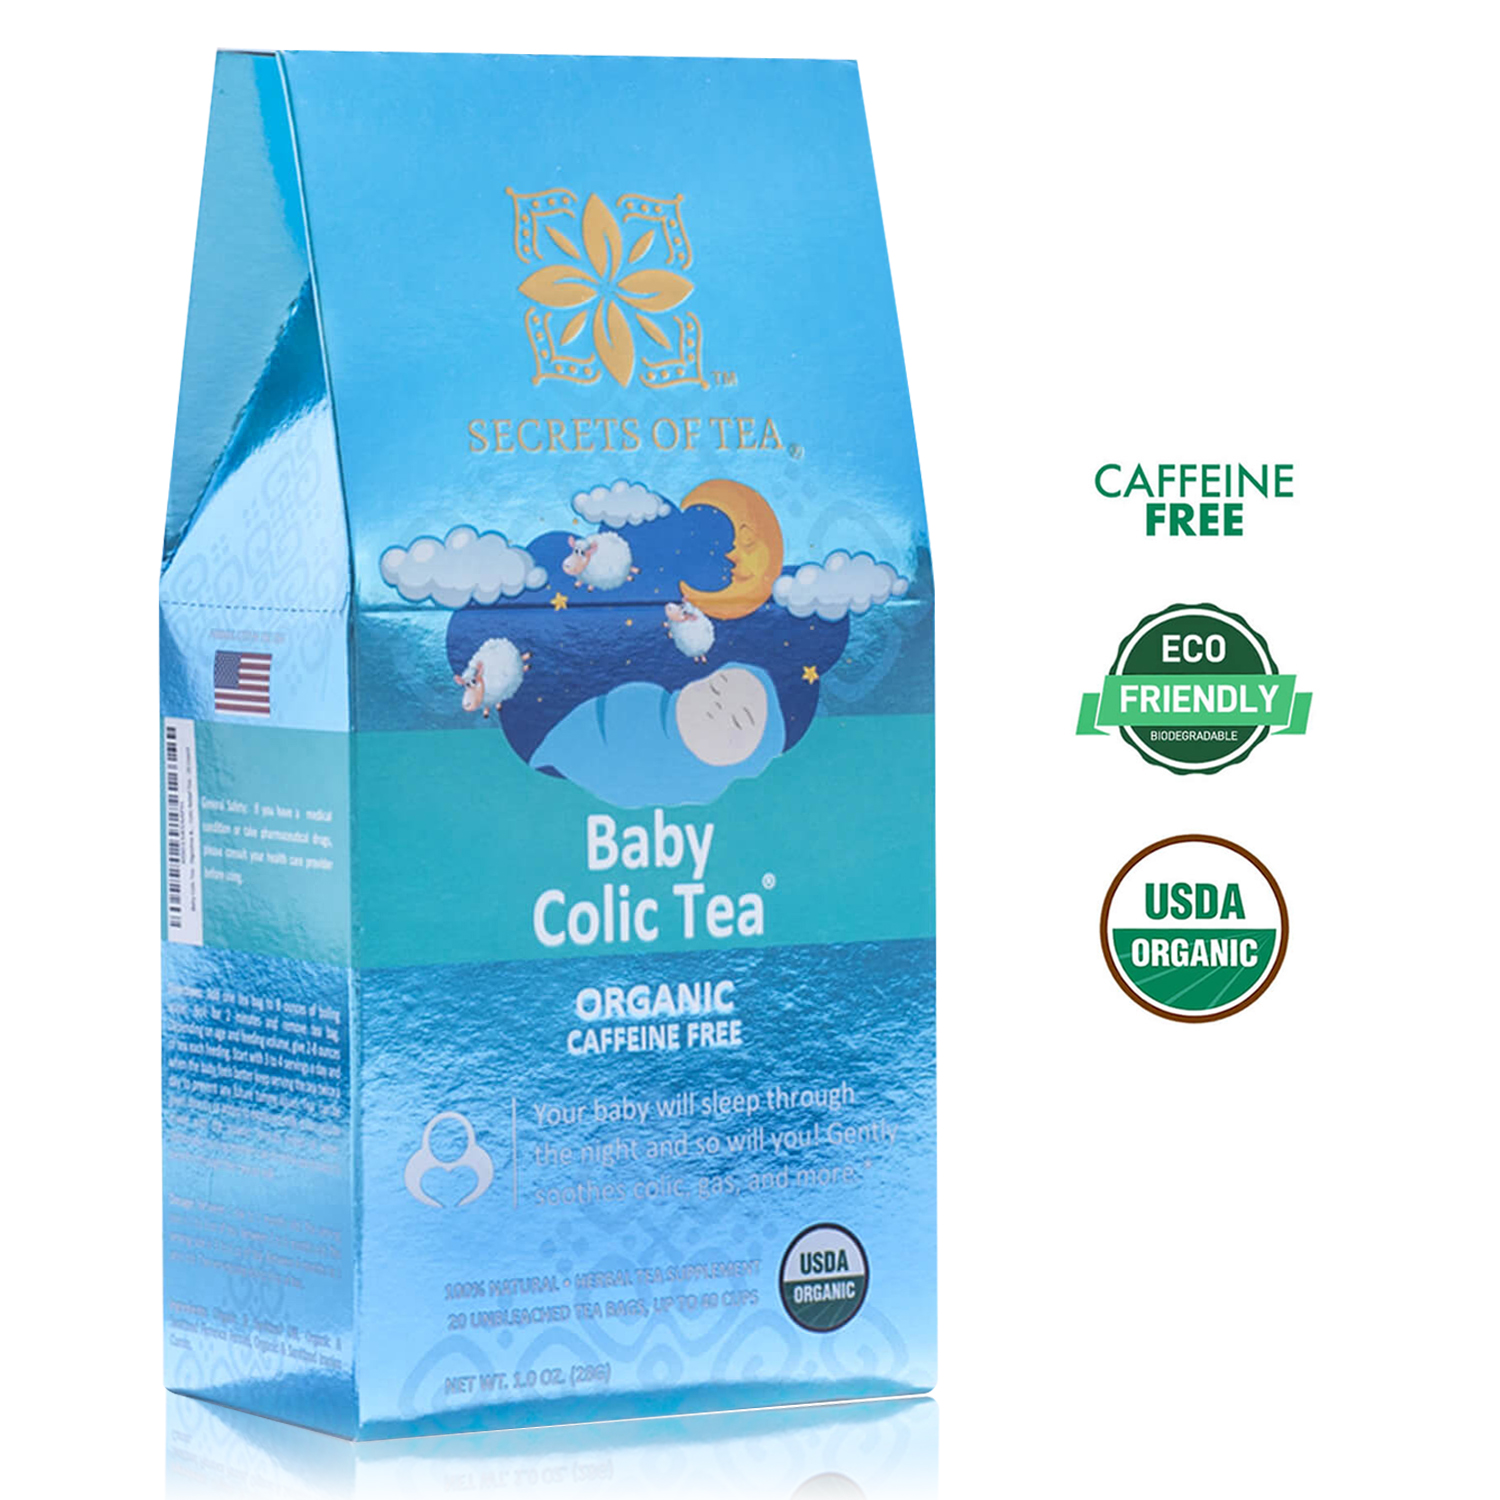 Secrets of Tea Baby Colic Tea 4 innerpacks per case 2.0 oz